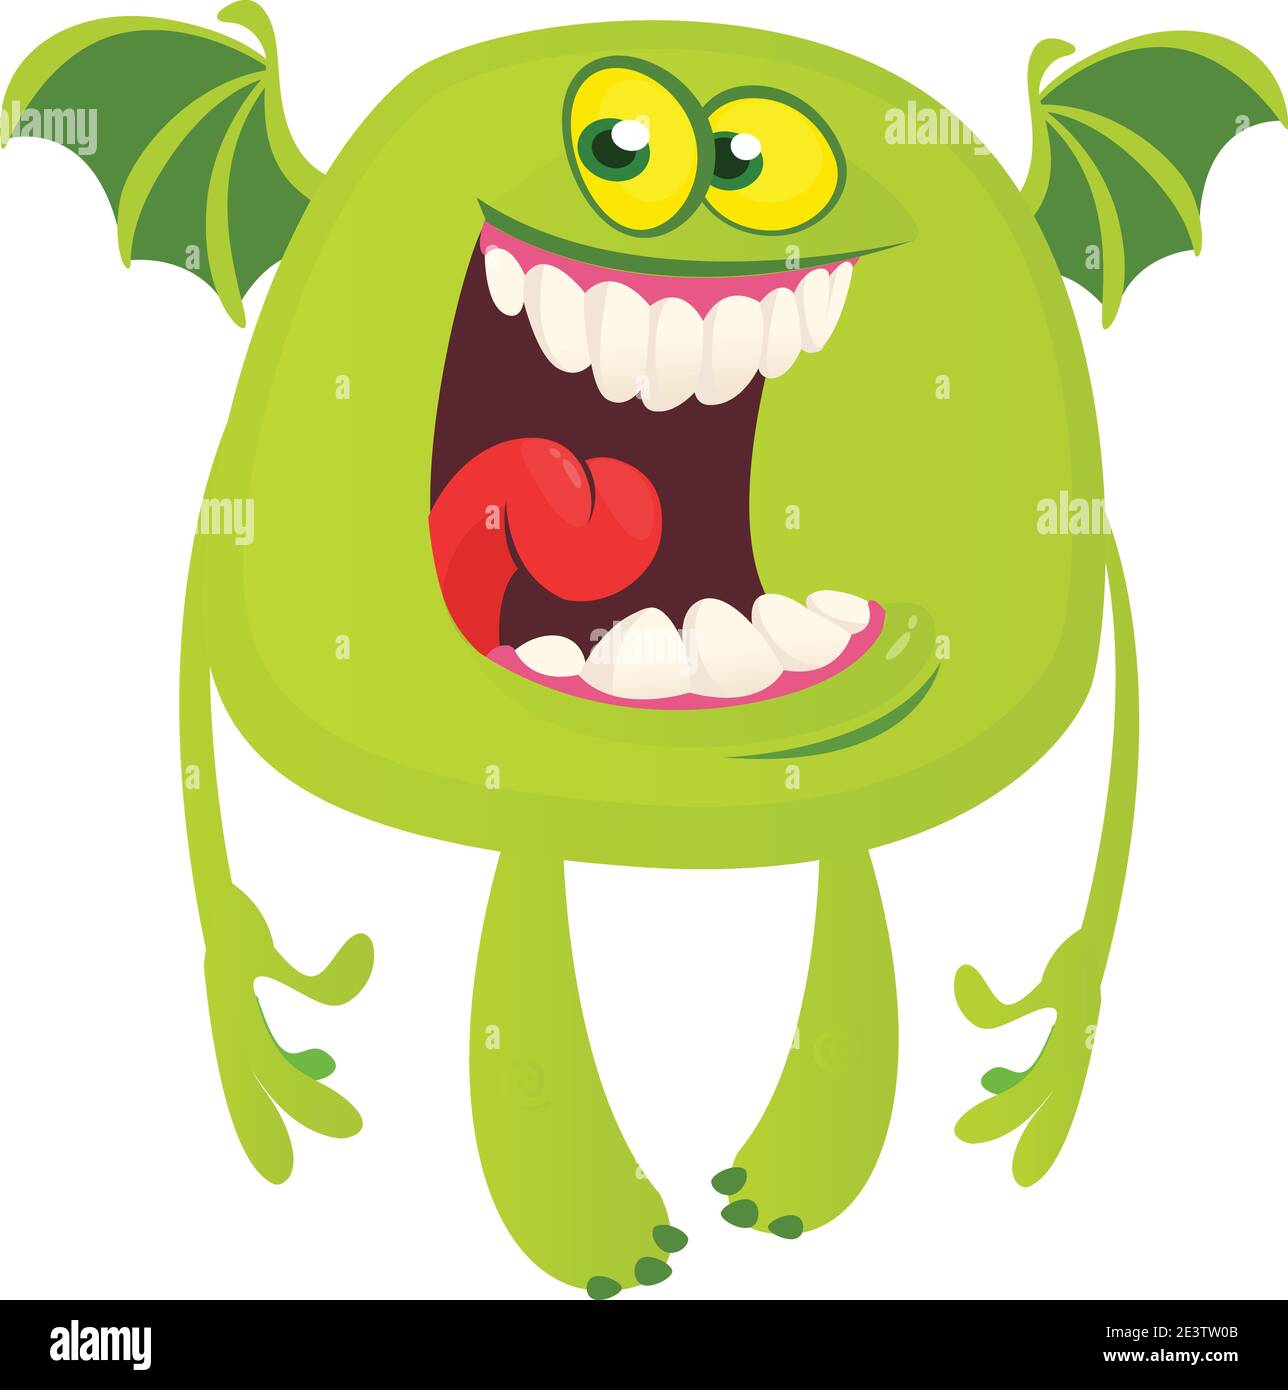 Cute cartoon monster smiling. Vector illustration of funny monster Stock Vector